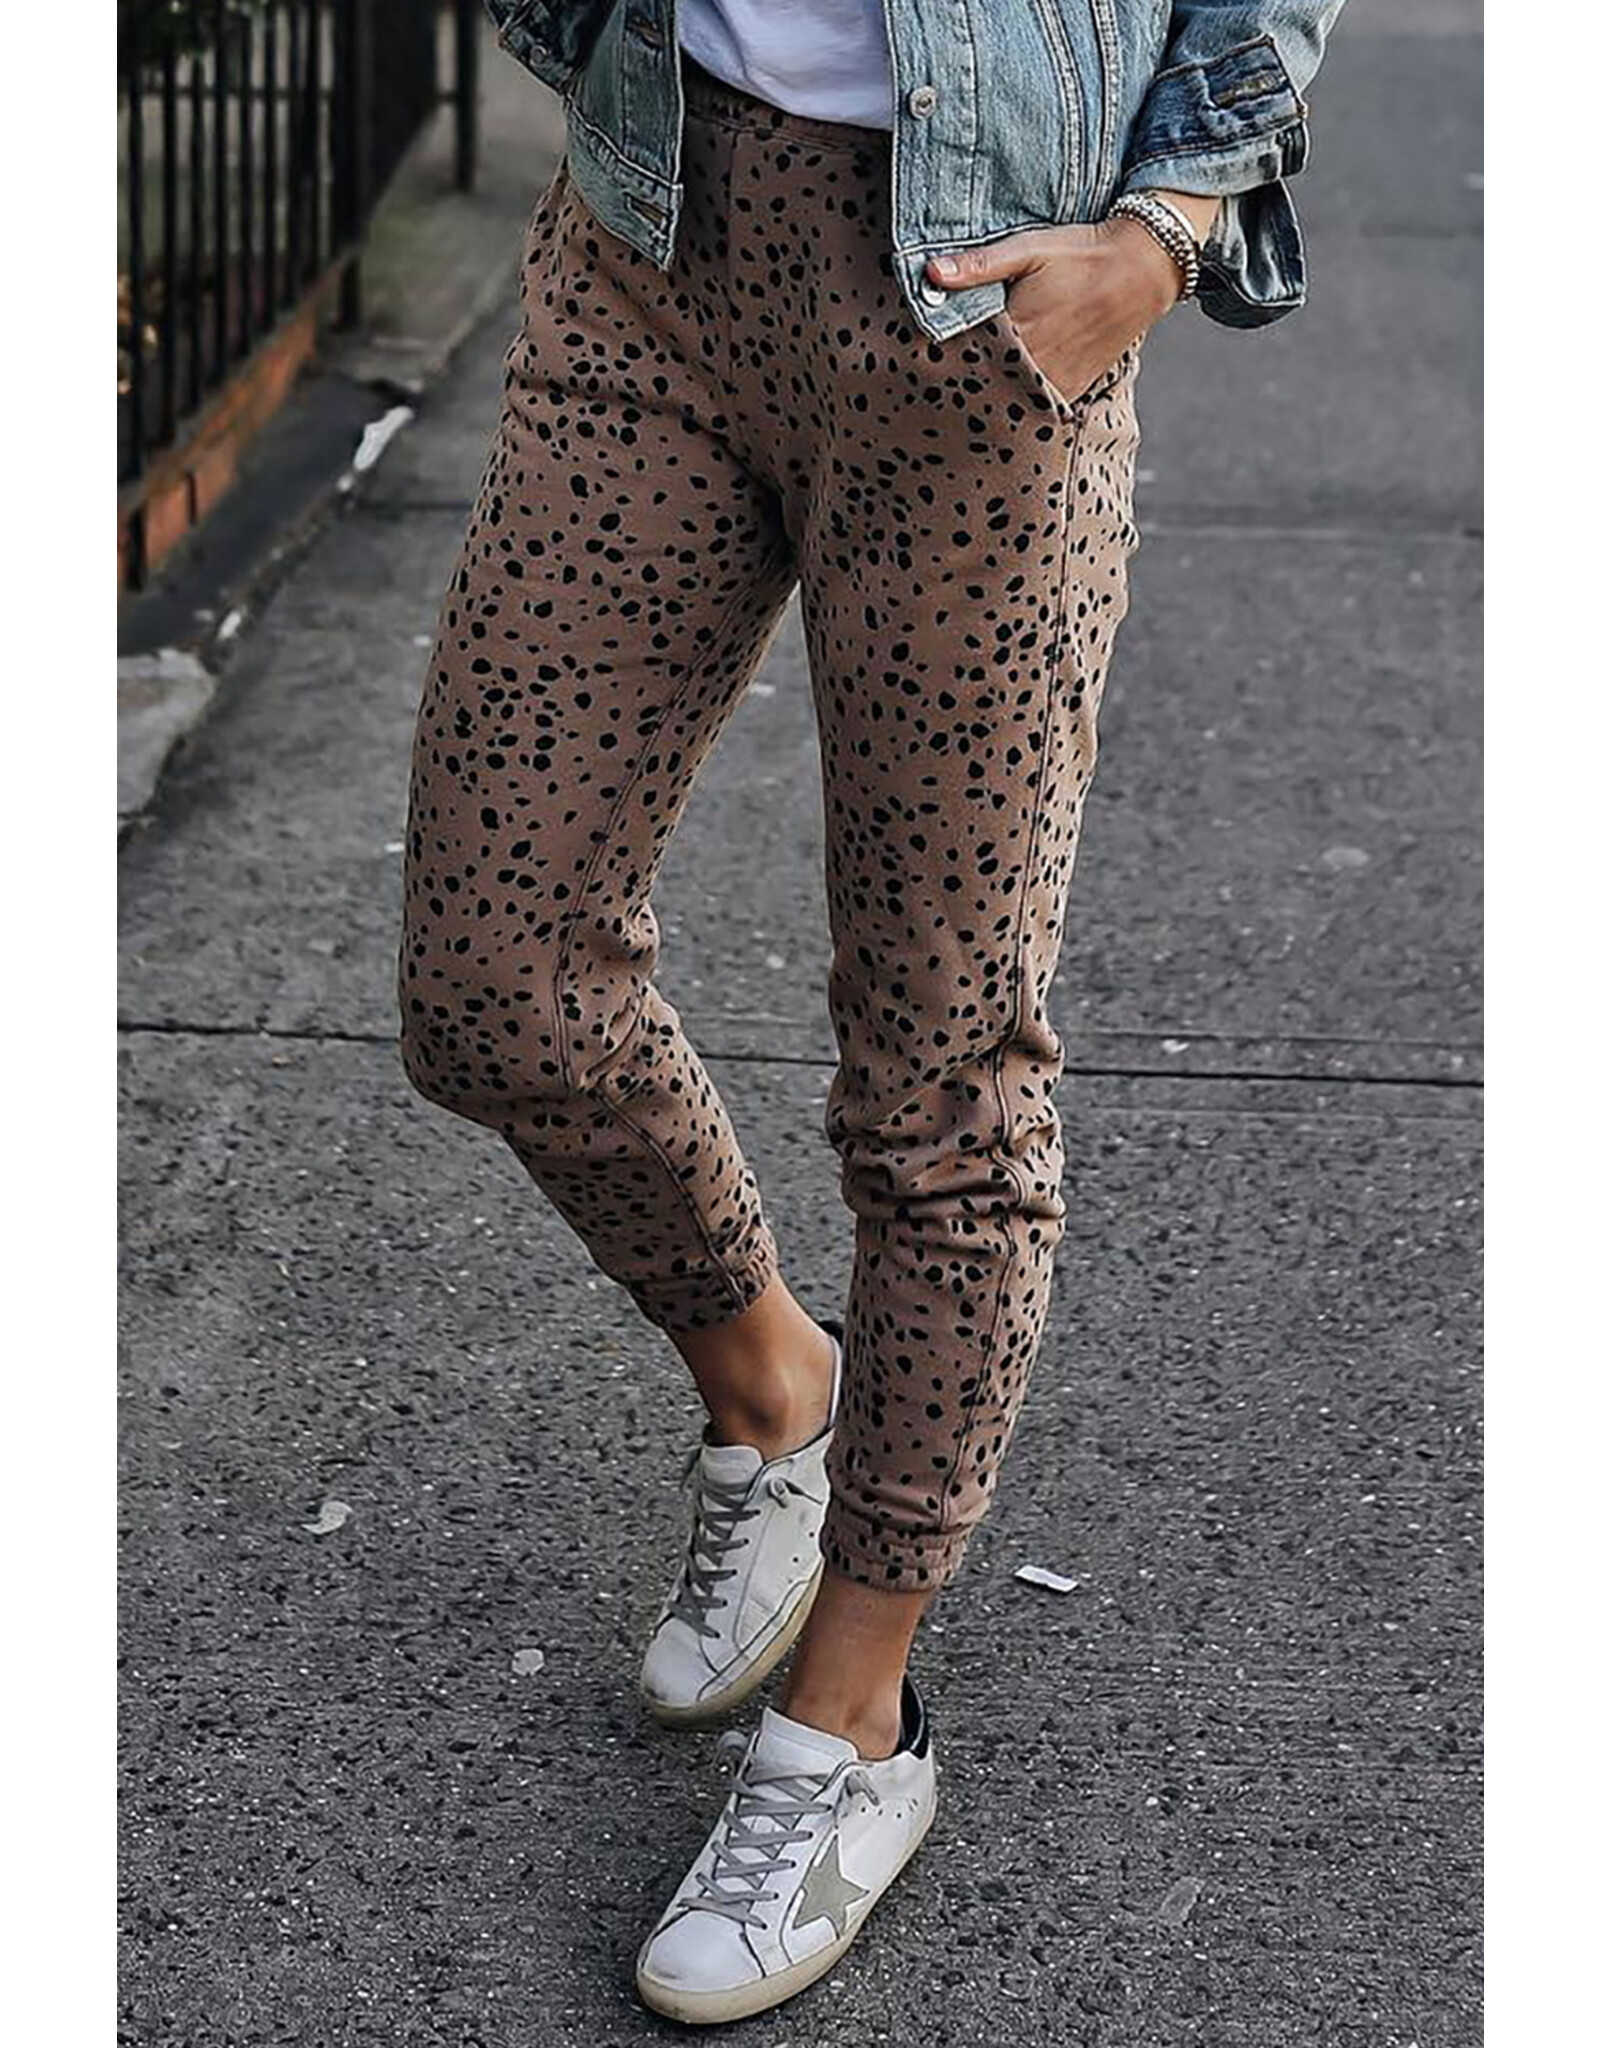 LATA Leopard print skinny pants